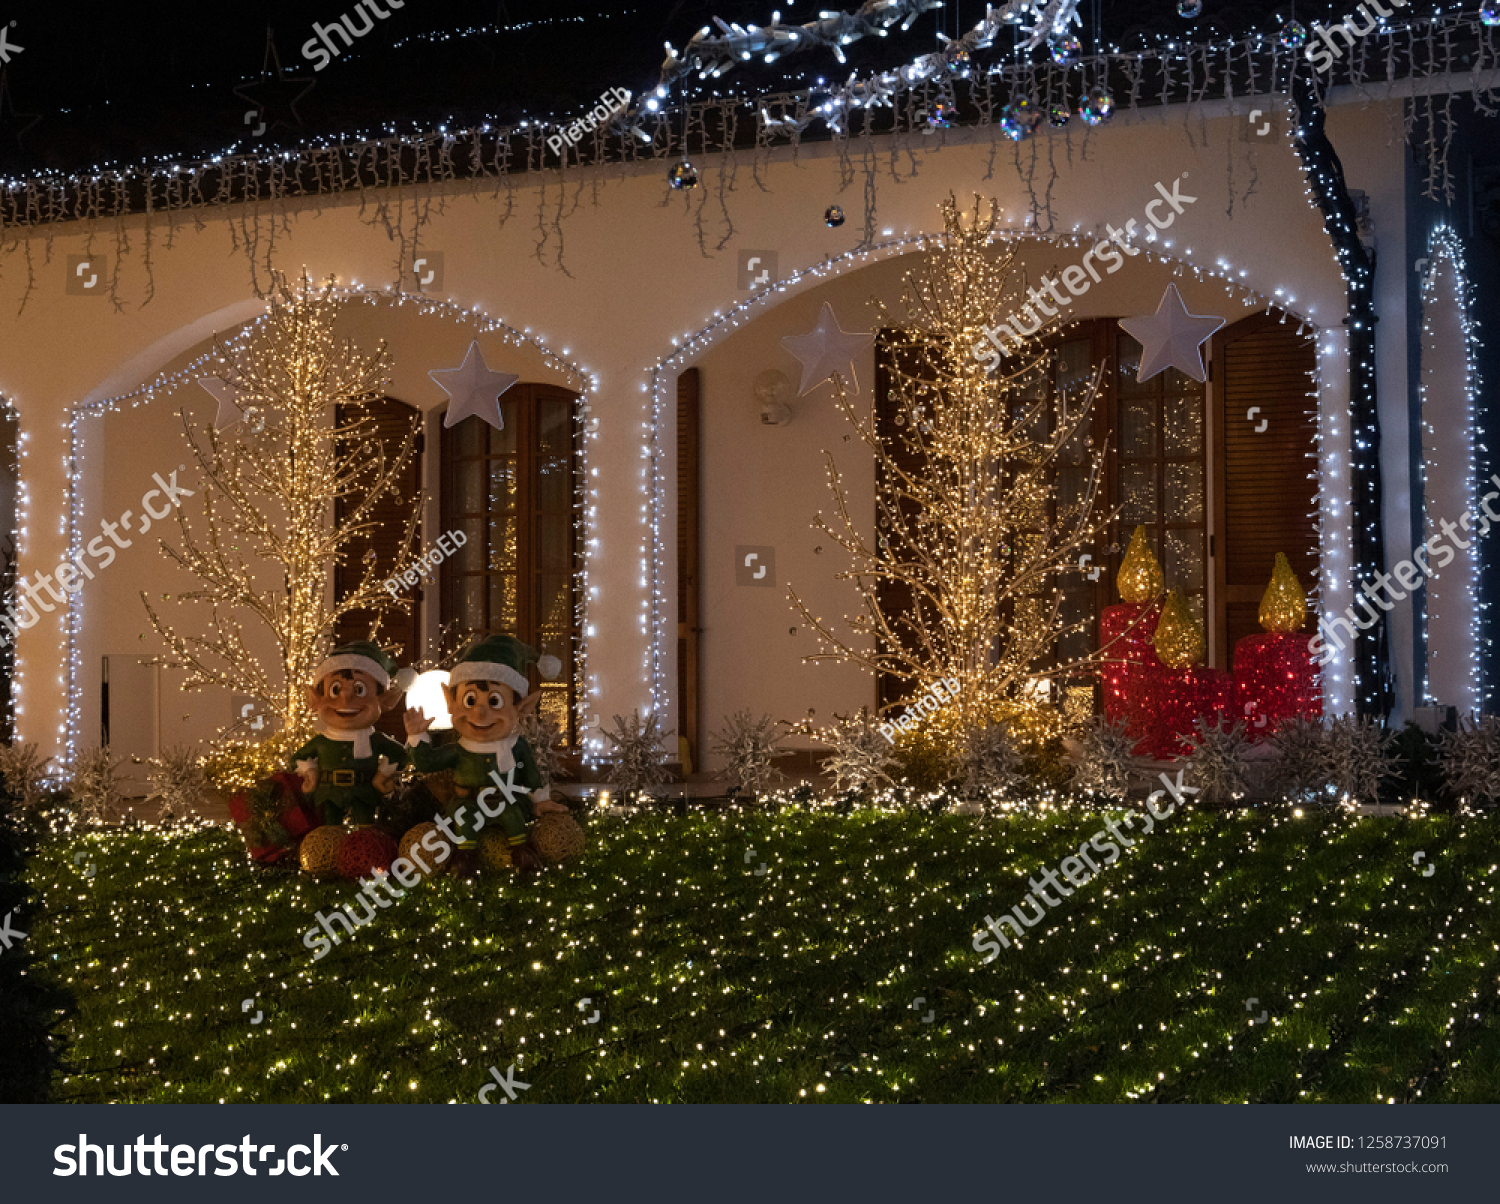 Santa Claus Casa Di Babbo Natale.Melegnano Italy 12 15 2018 Santa Parks Outdoor Stock Image 1258737091